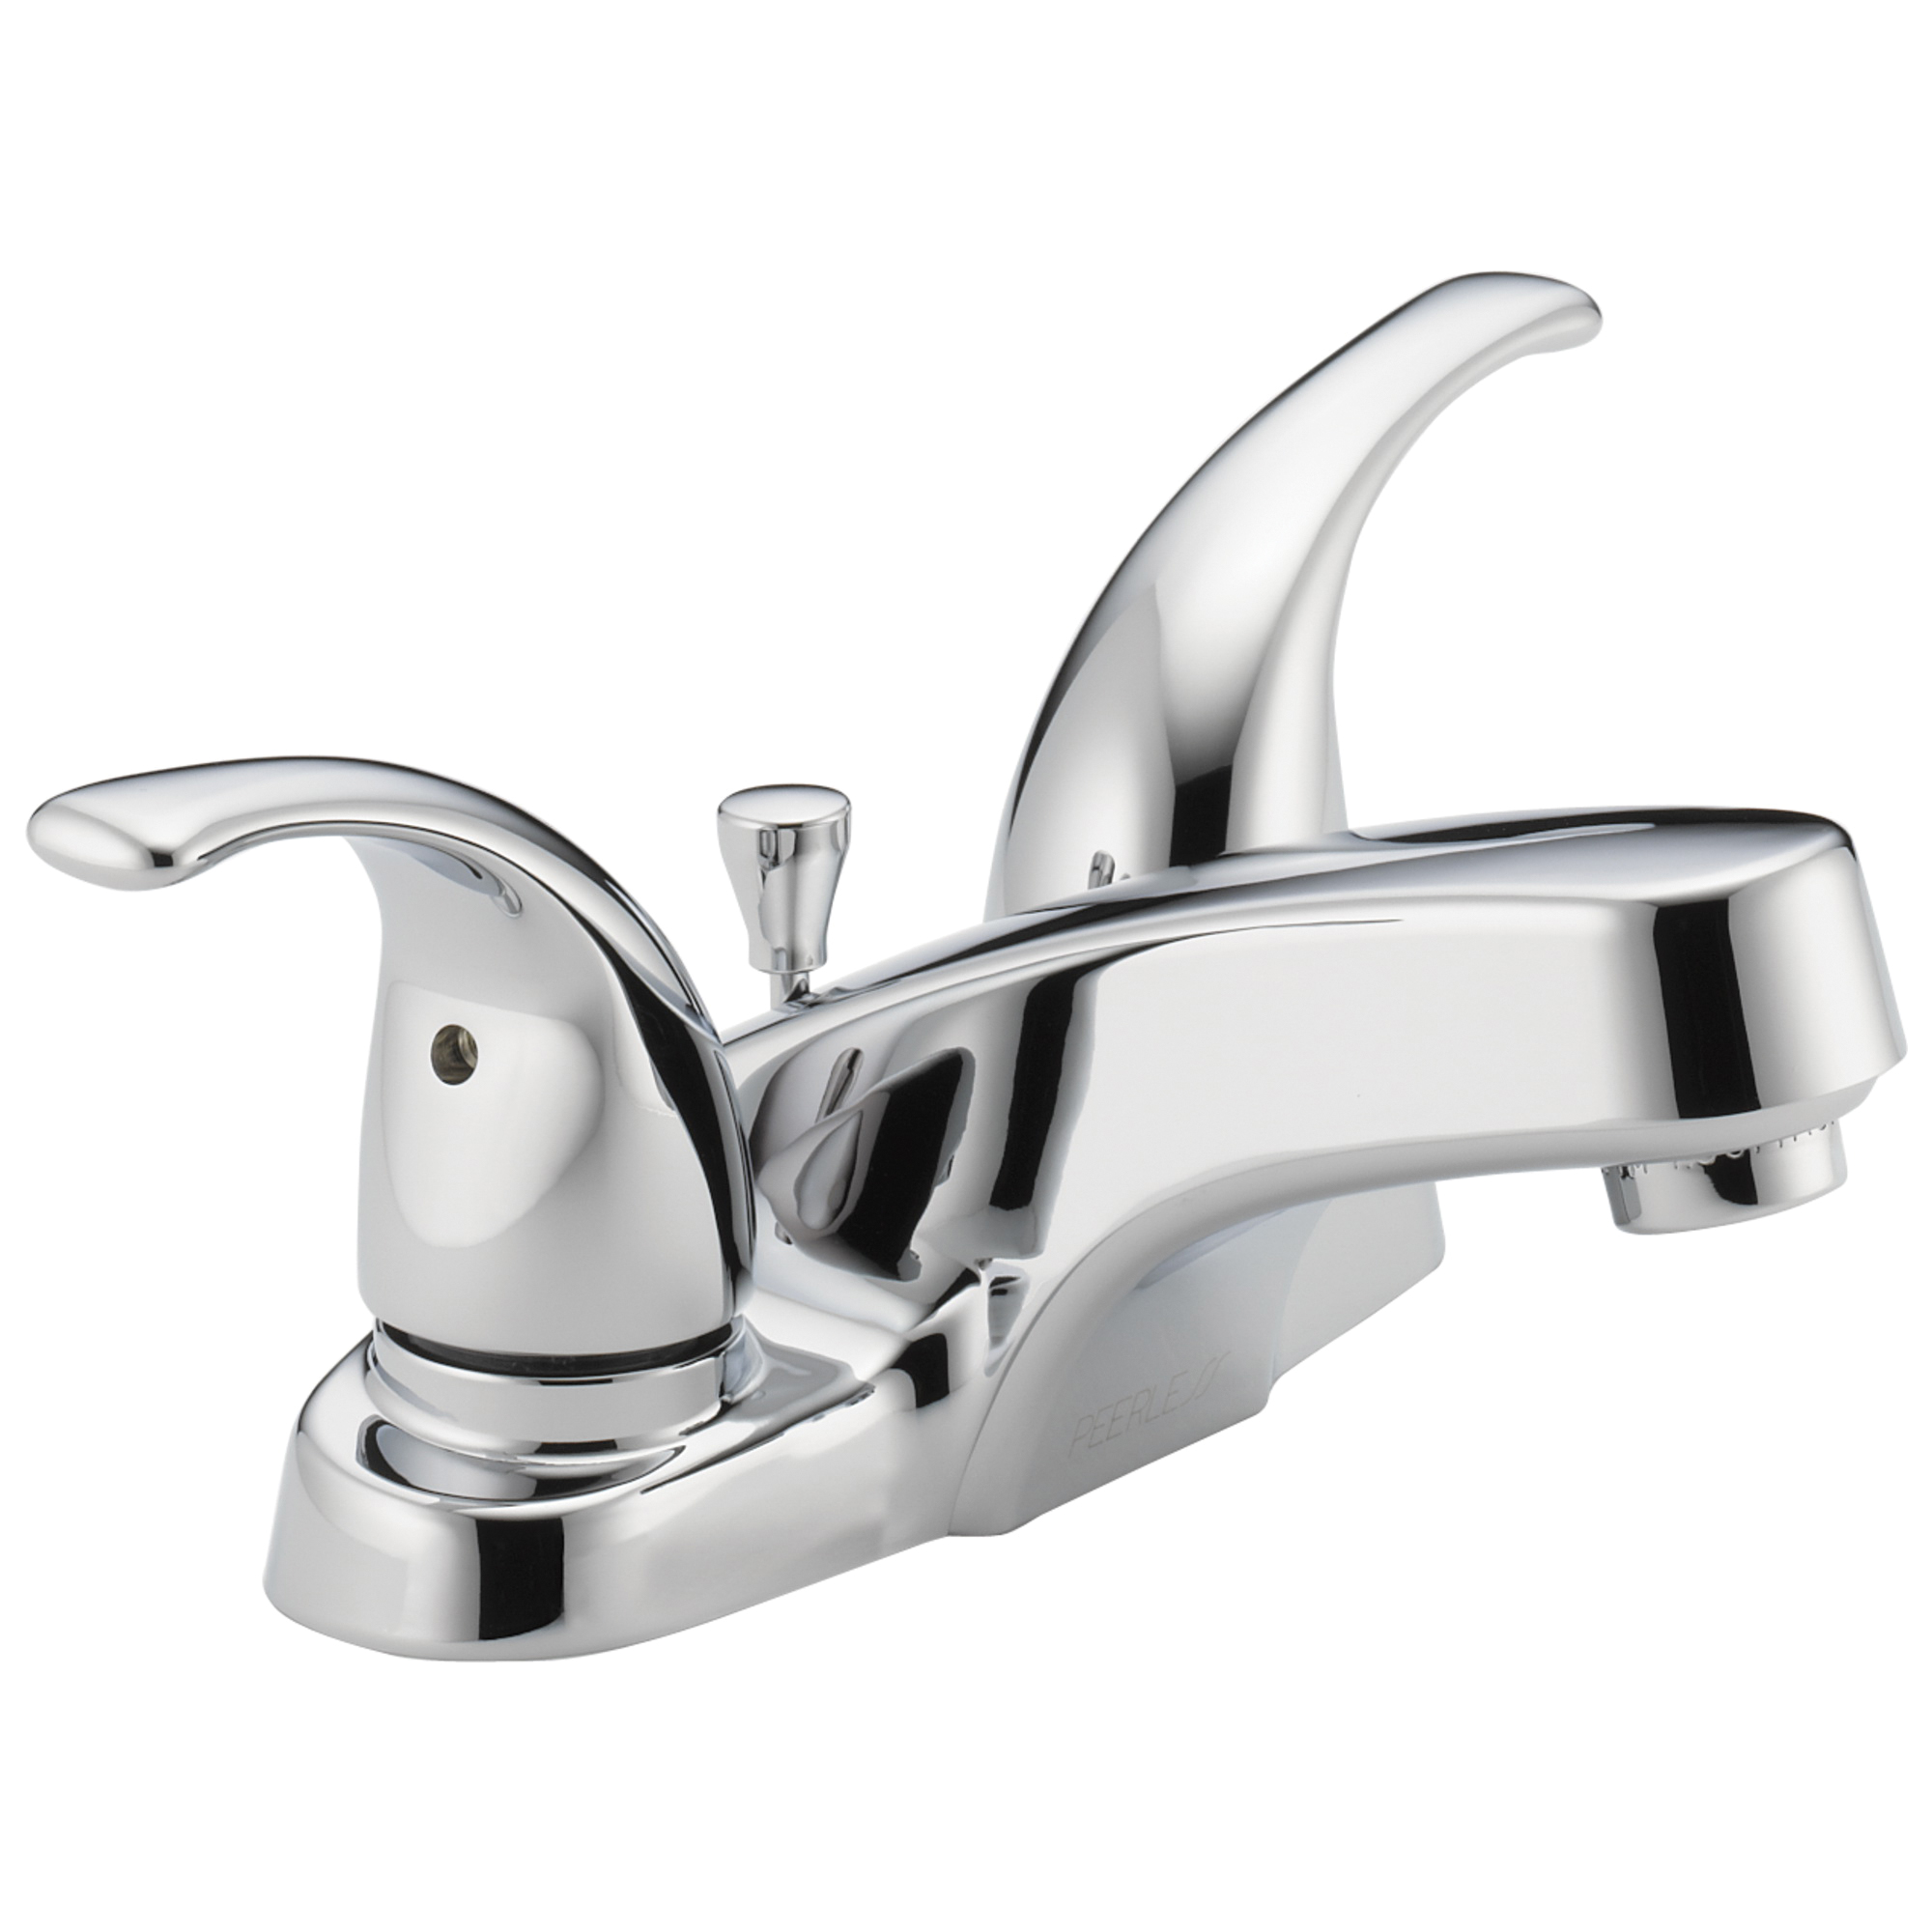 Peerless® P299628LF-M Centerset Lavatory Faucet, Chrome Plated, 2 Handles, Metal Pop-Up Drain, 1.2 gpm